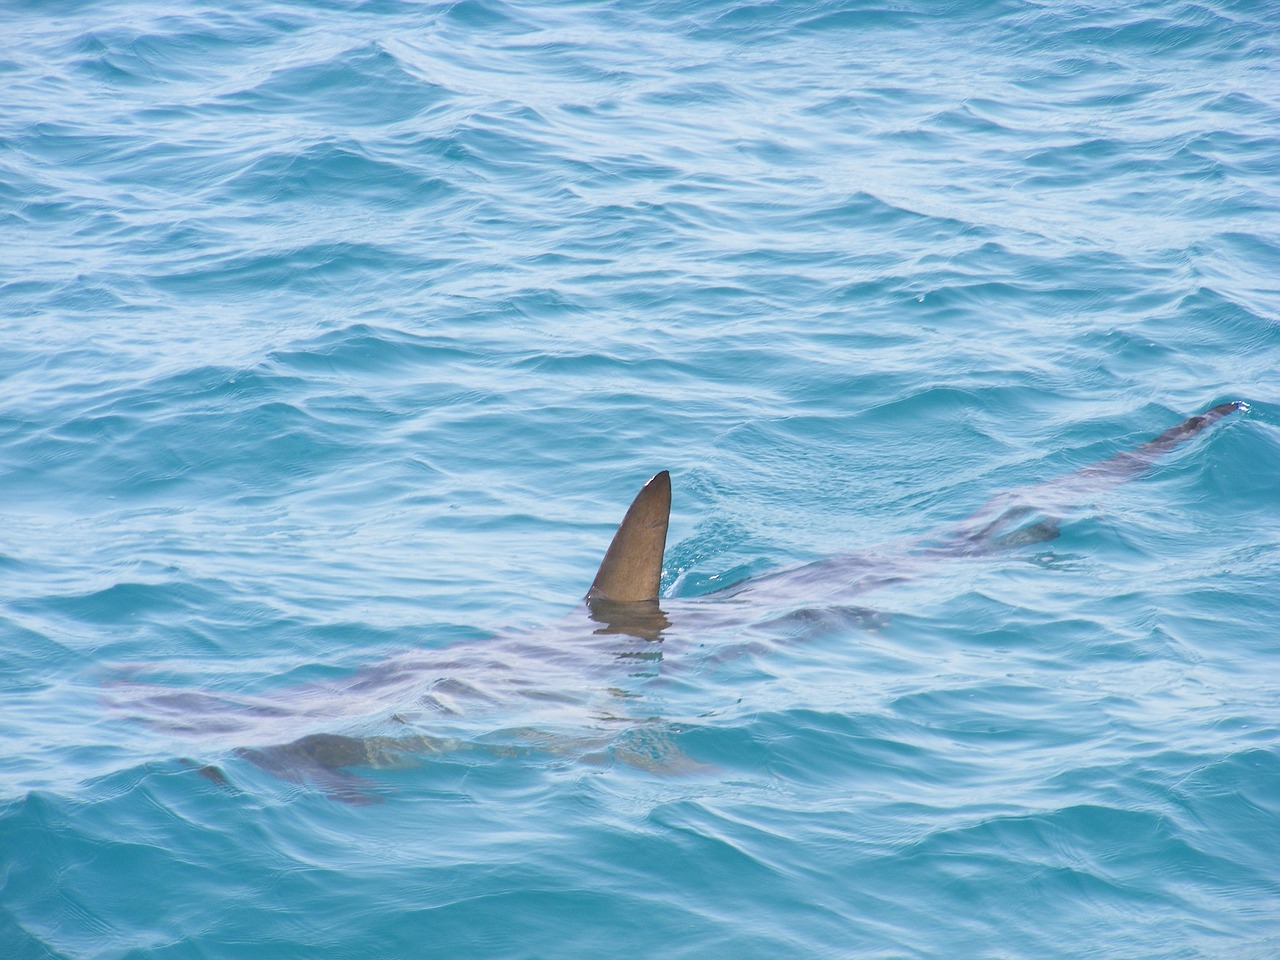 tiger shark attack in Haleiwa